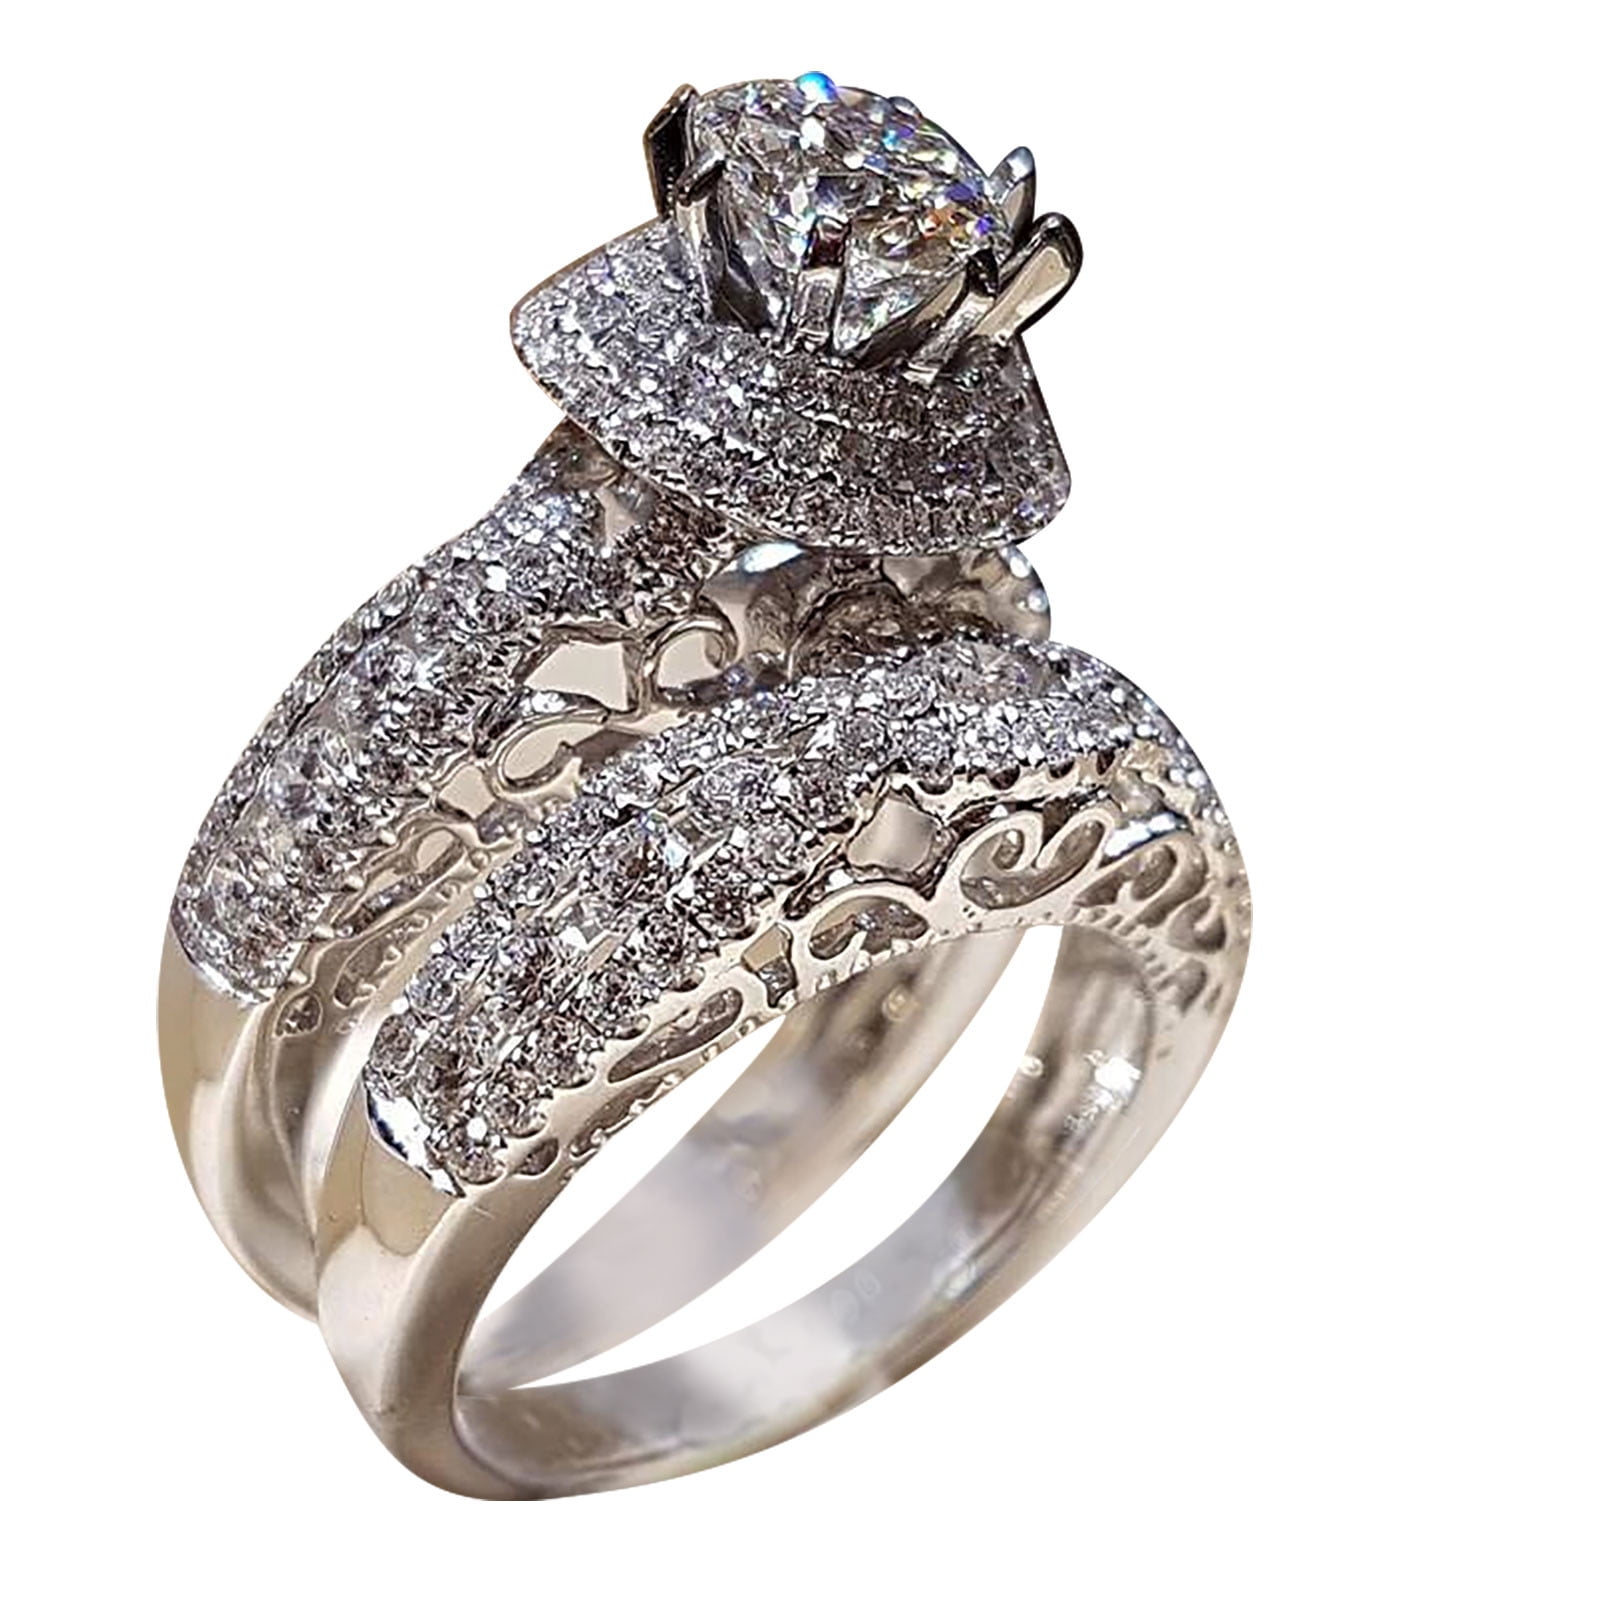 2mm Sapphire Garnet Engagement Ring Band Silver White Gold Bridal Wedding Band Birthstone Stacking Ring Minimalist Blue Red Gemstone Ring